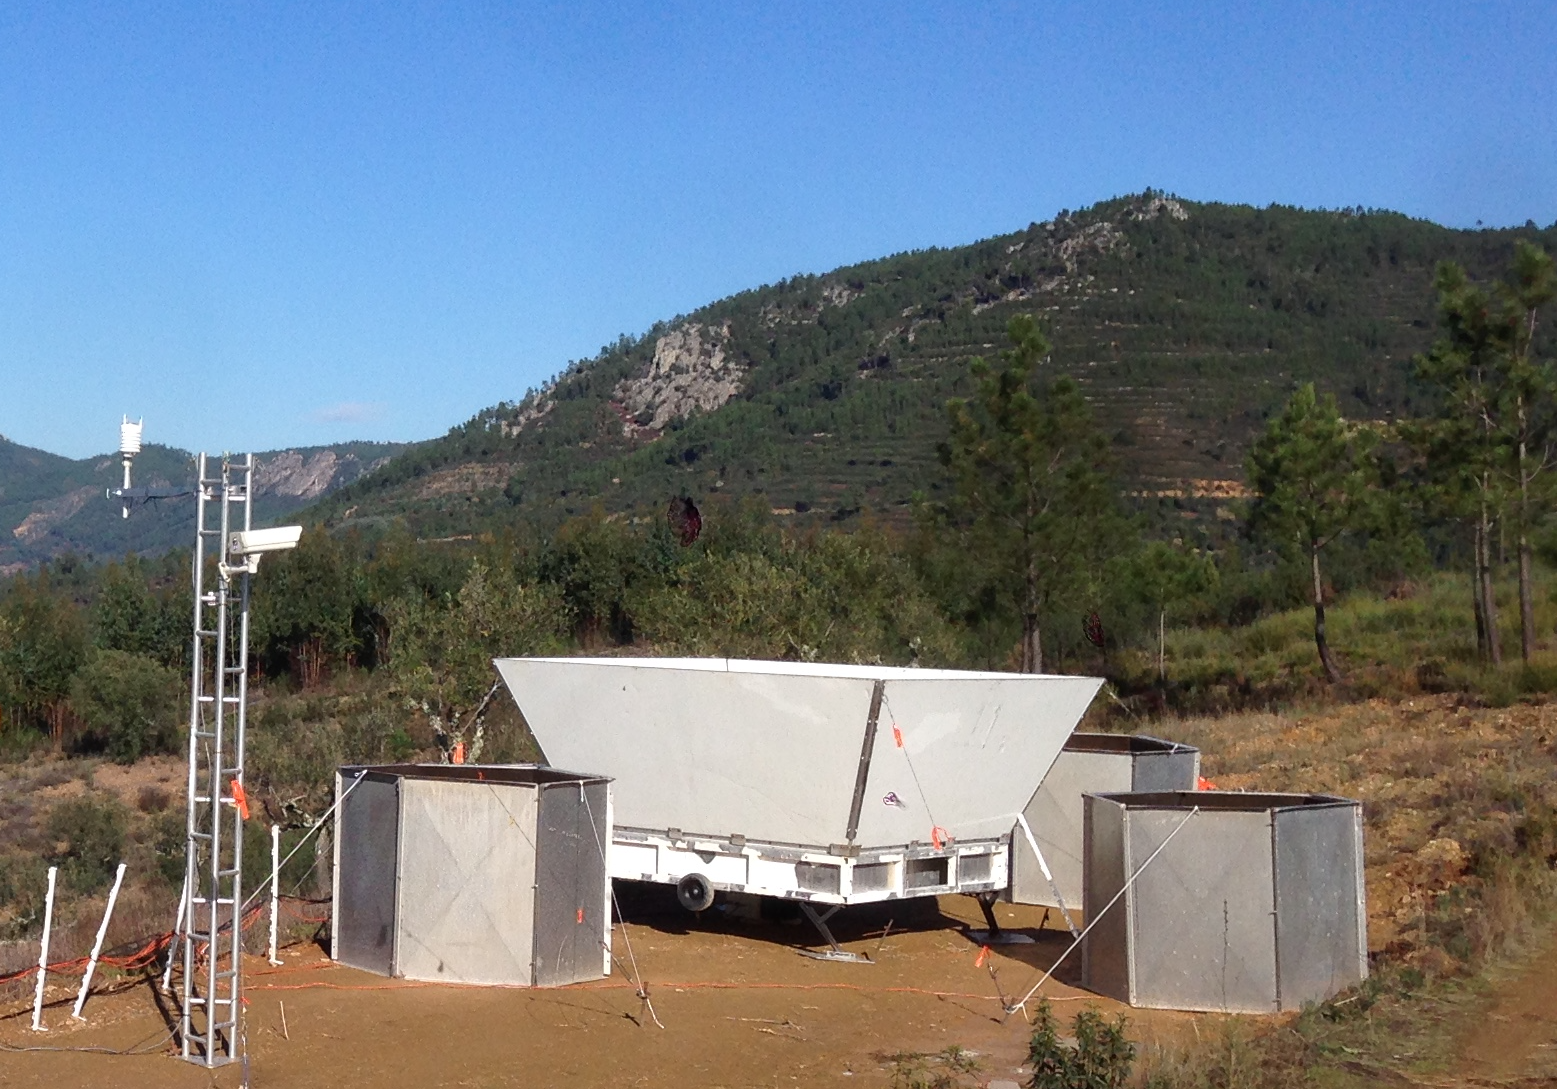 ISS 1290 MHz wind profiler at Perdigao, Portugal